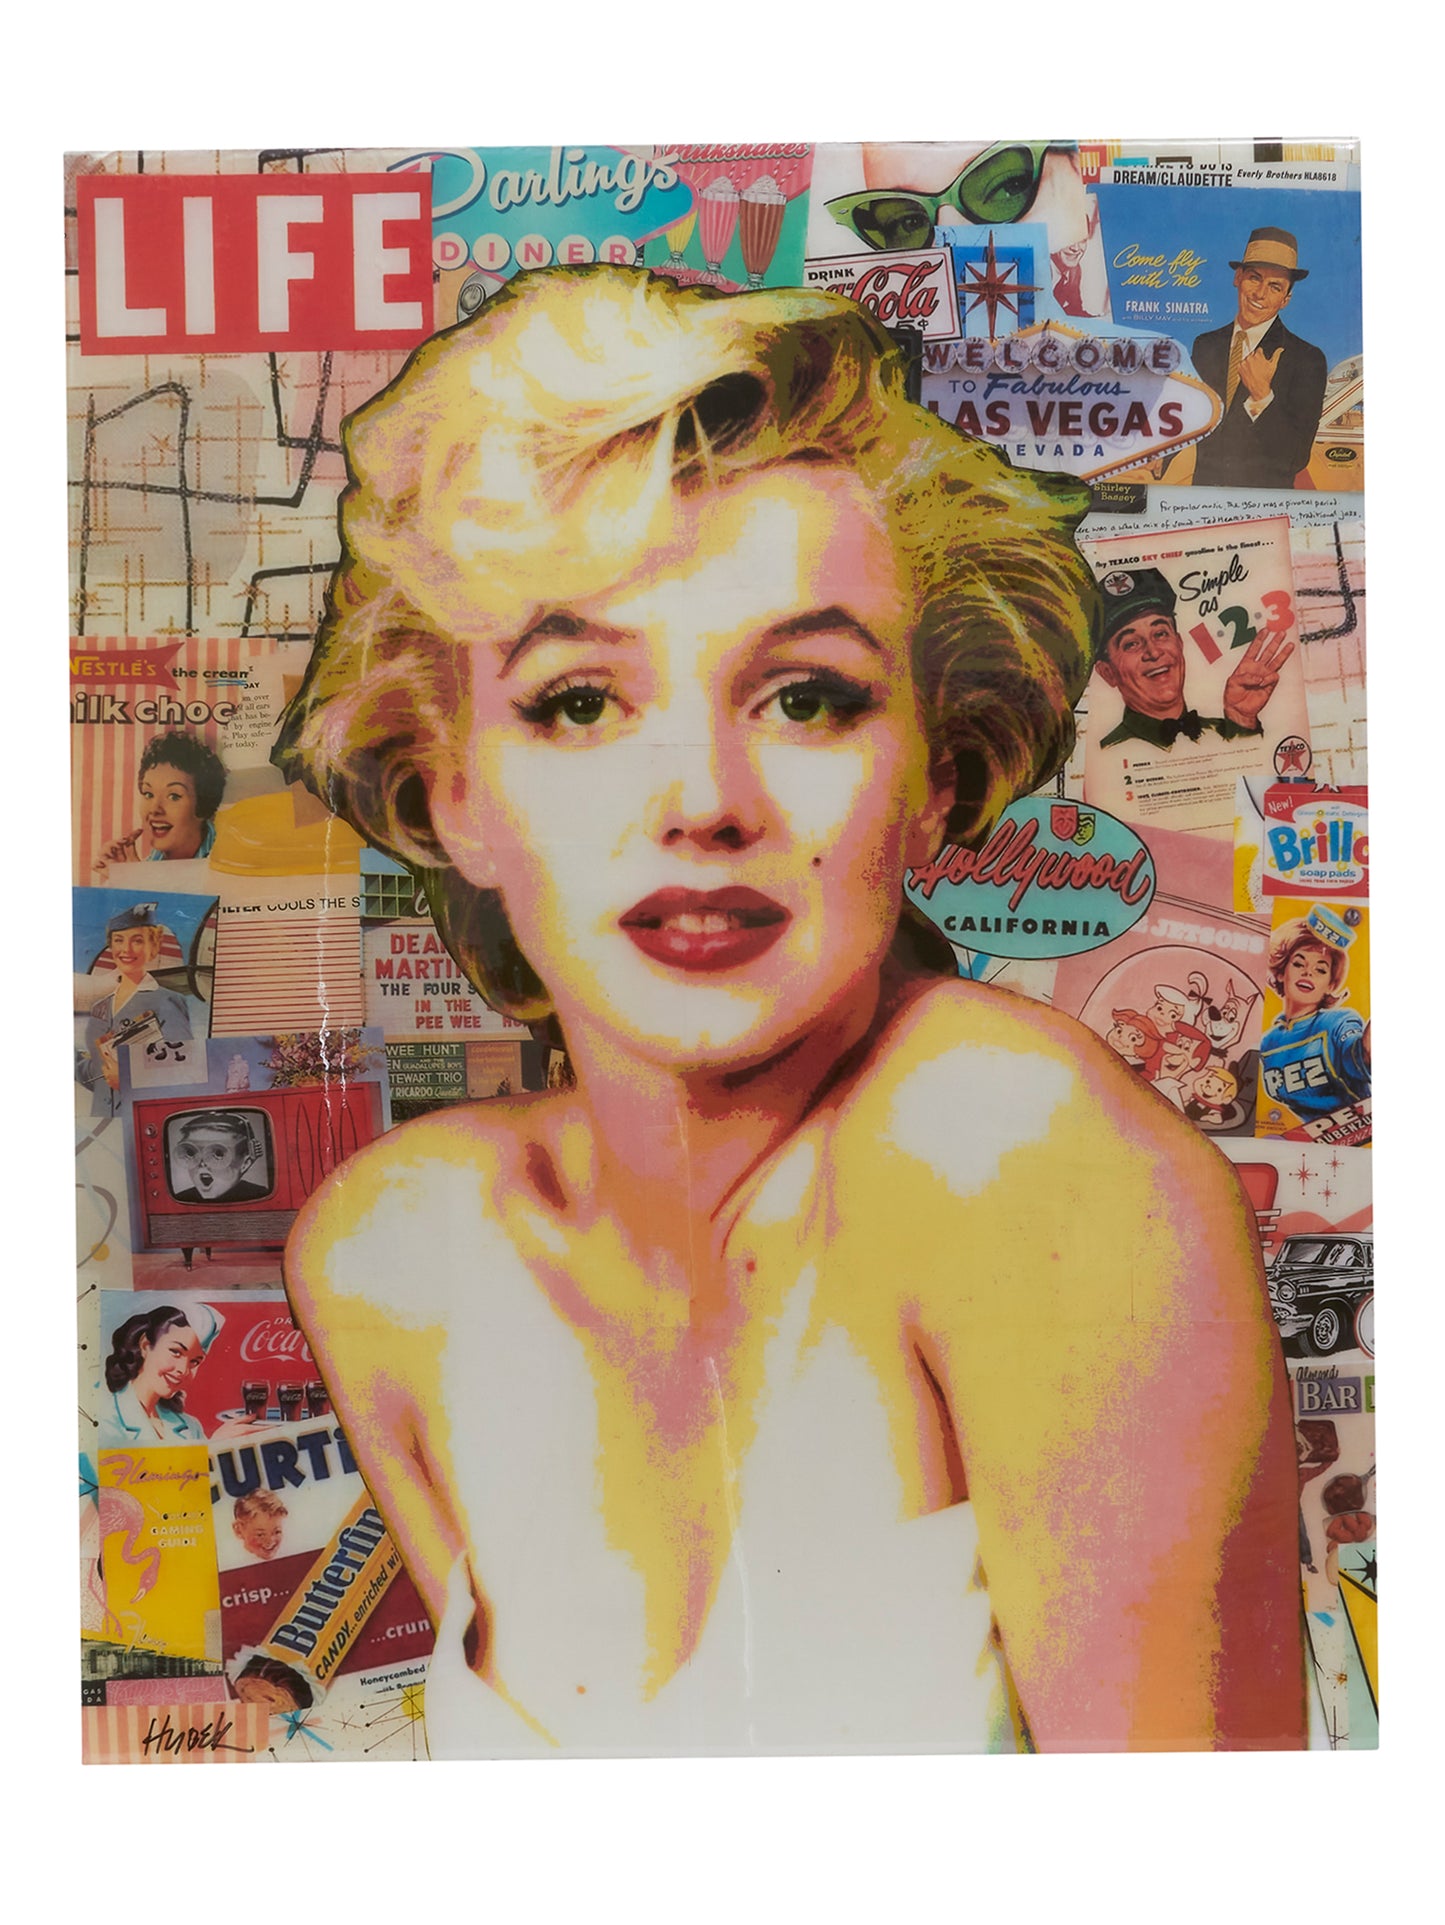 Marilyn Monroe Life in the Fifties Pop Art by Jim Hudek Weston Table